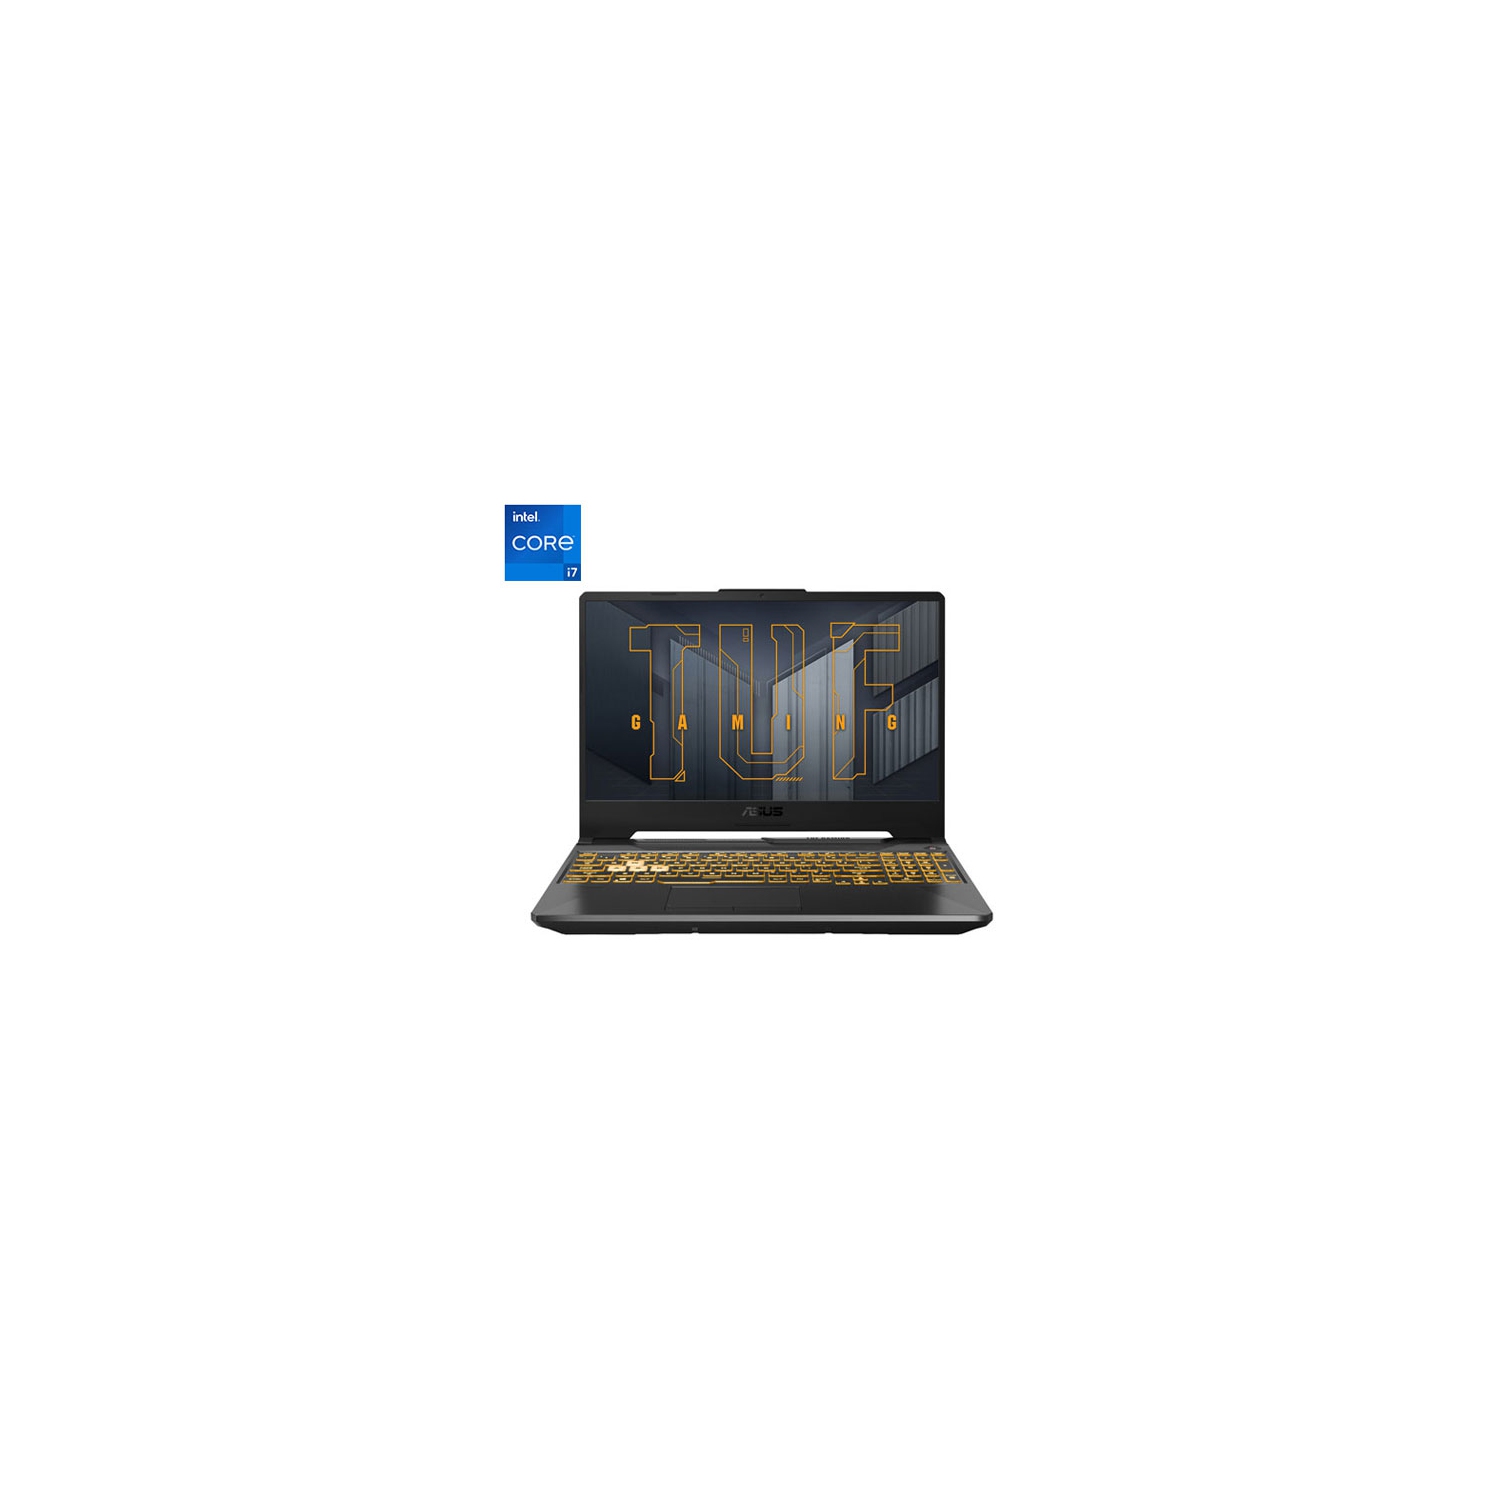 Refurbished (Fair) - ASUS TUF F15 15.6" Gaming Laptop - Grey (Intel Core i7-11800H/512GB SSD/16GB RAM/RTX 3060/Win10)